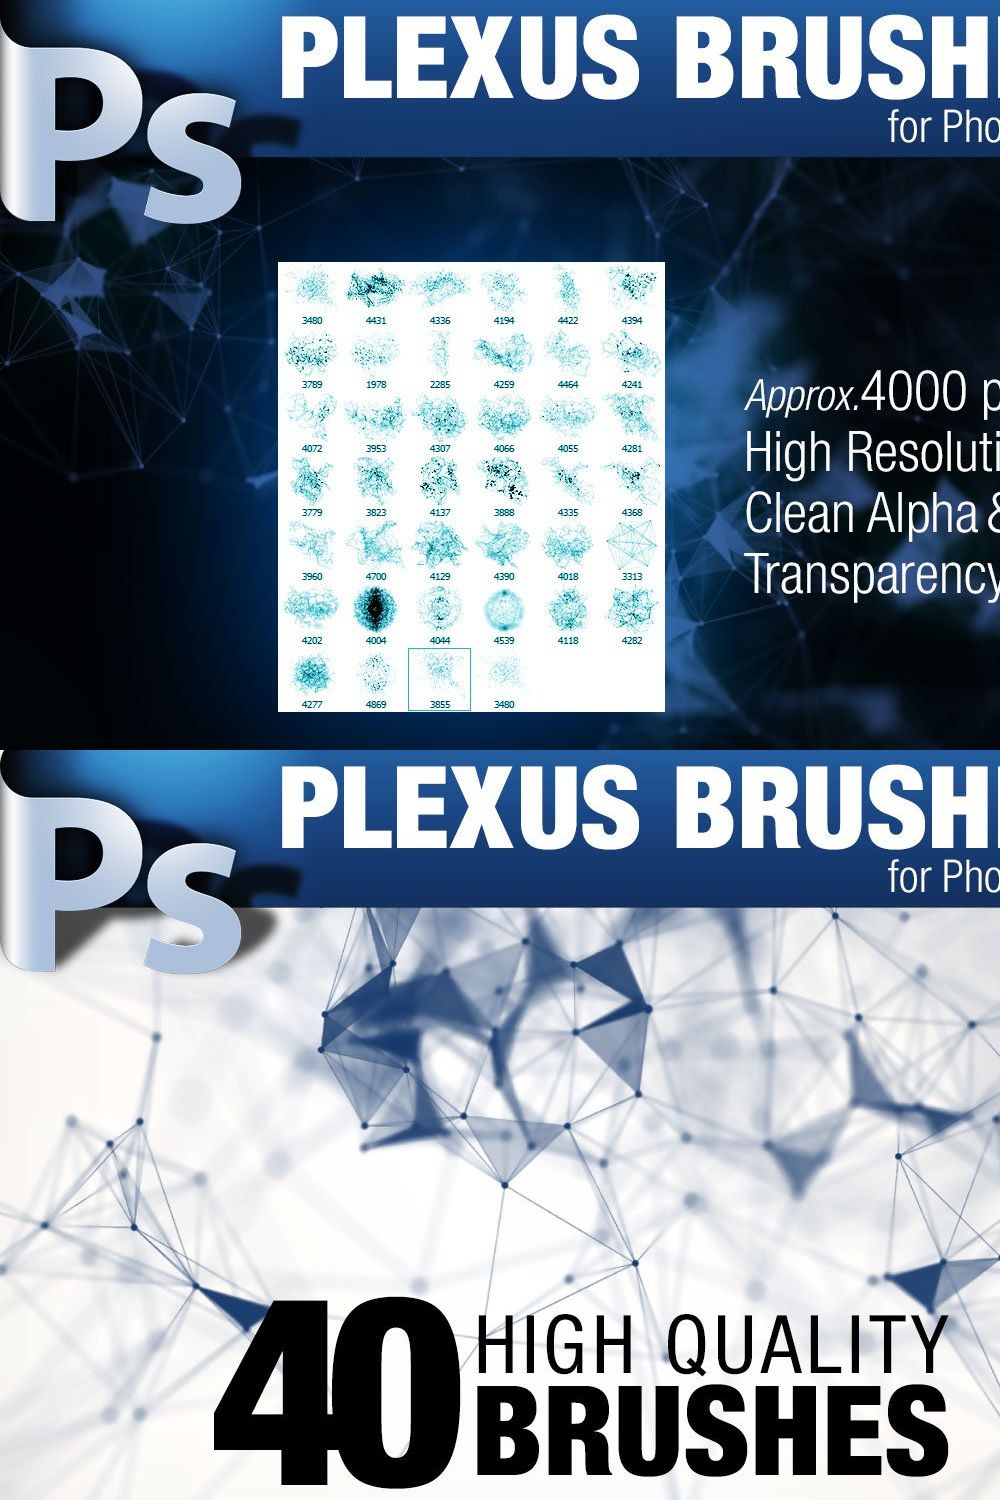 CG Plexus Brushes for Photoshop pinterest preview image.